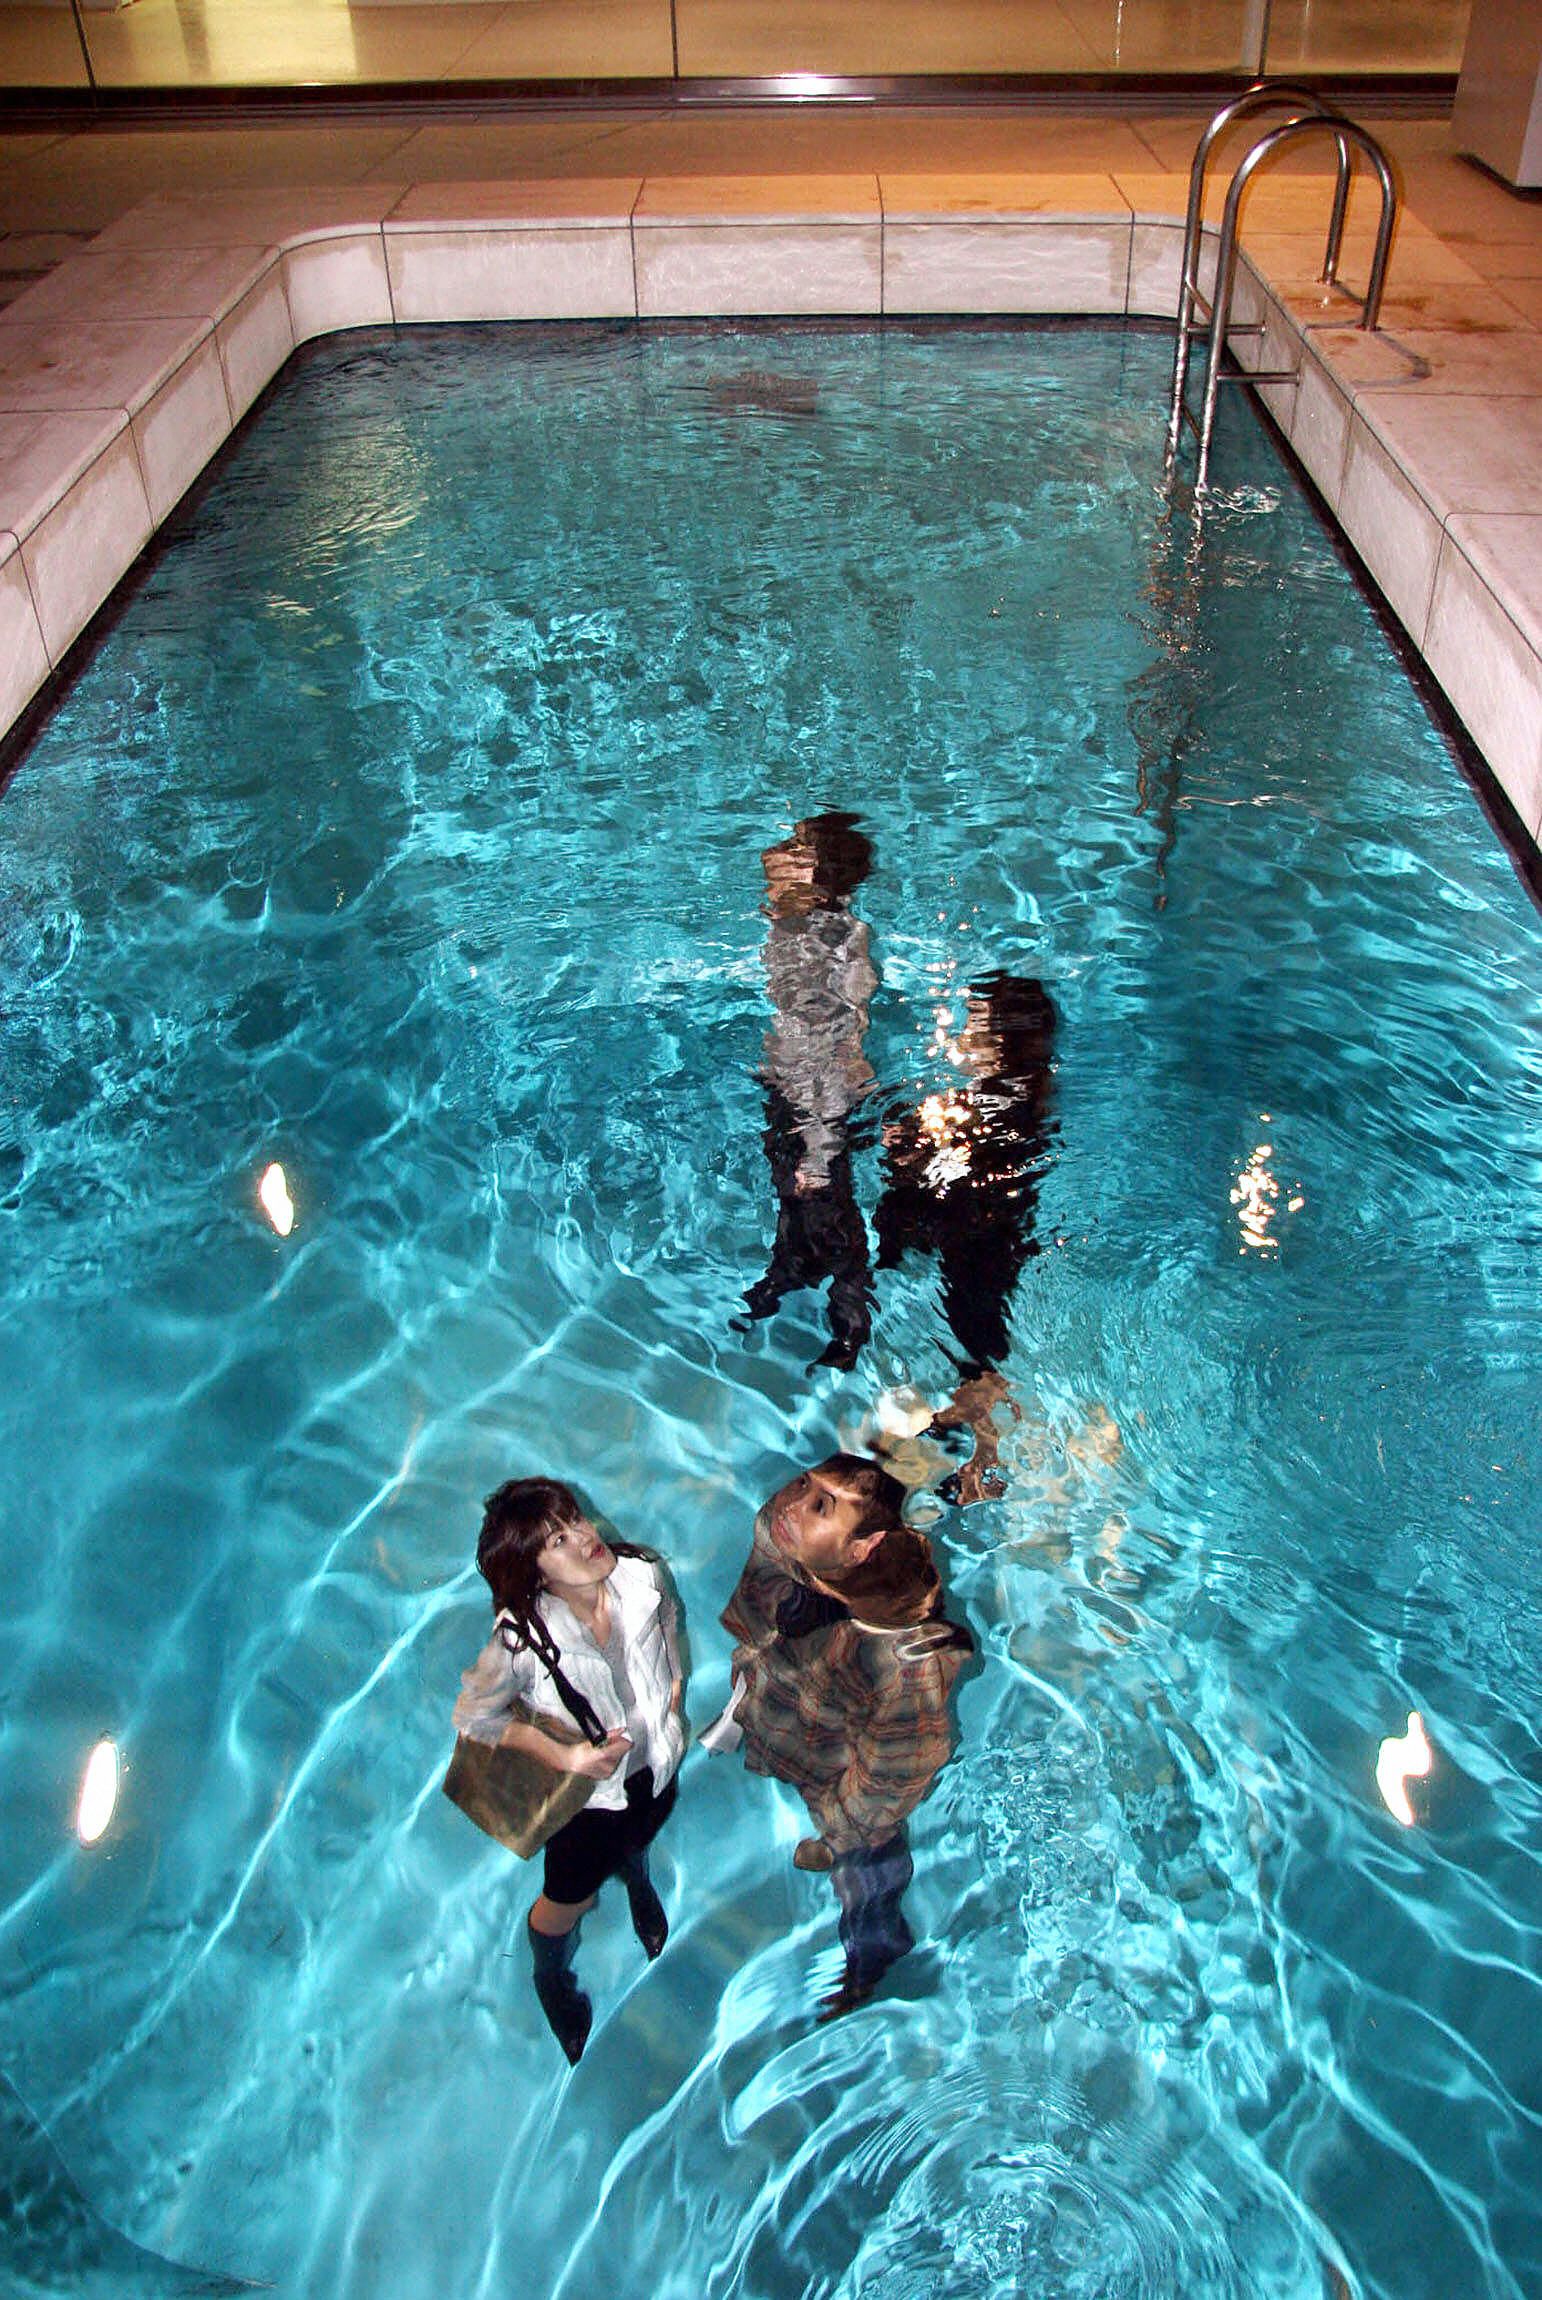 Leandro Erlich Swimming Pool - Optical Illusion Swimming Pool Art